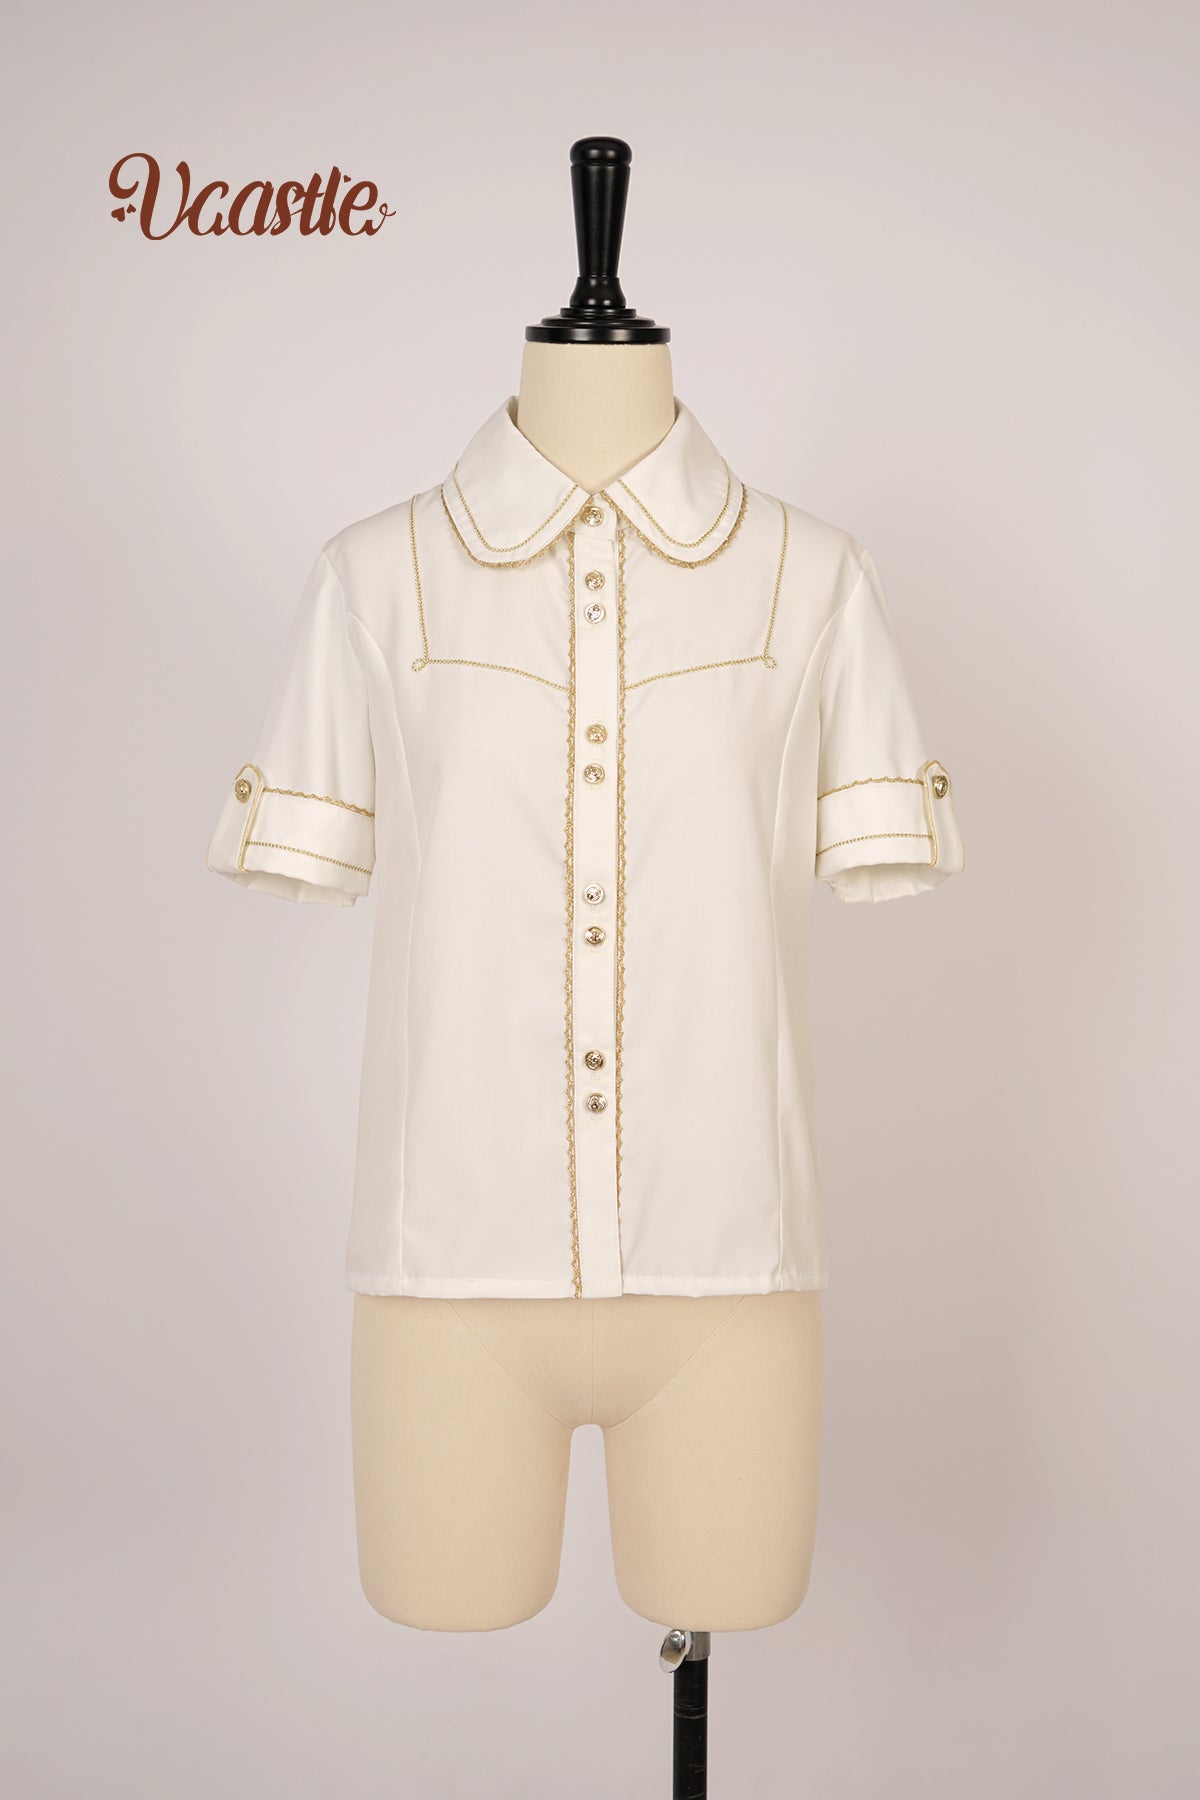 VCastle~Kawaii Lolita Shirt Summer Lolita Inner Blouse S White shirt 